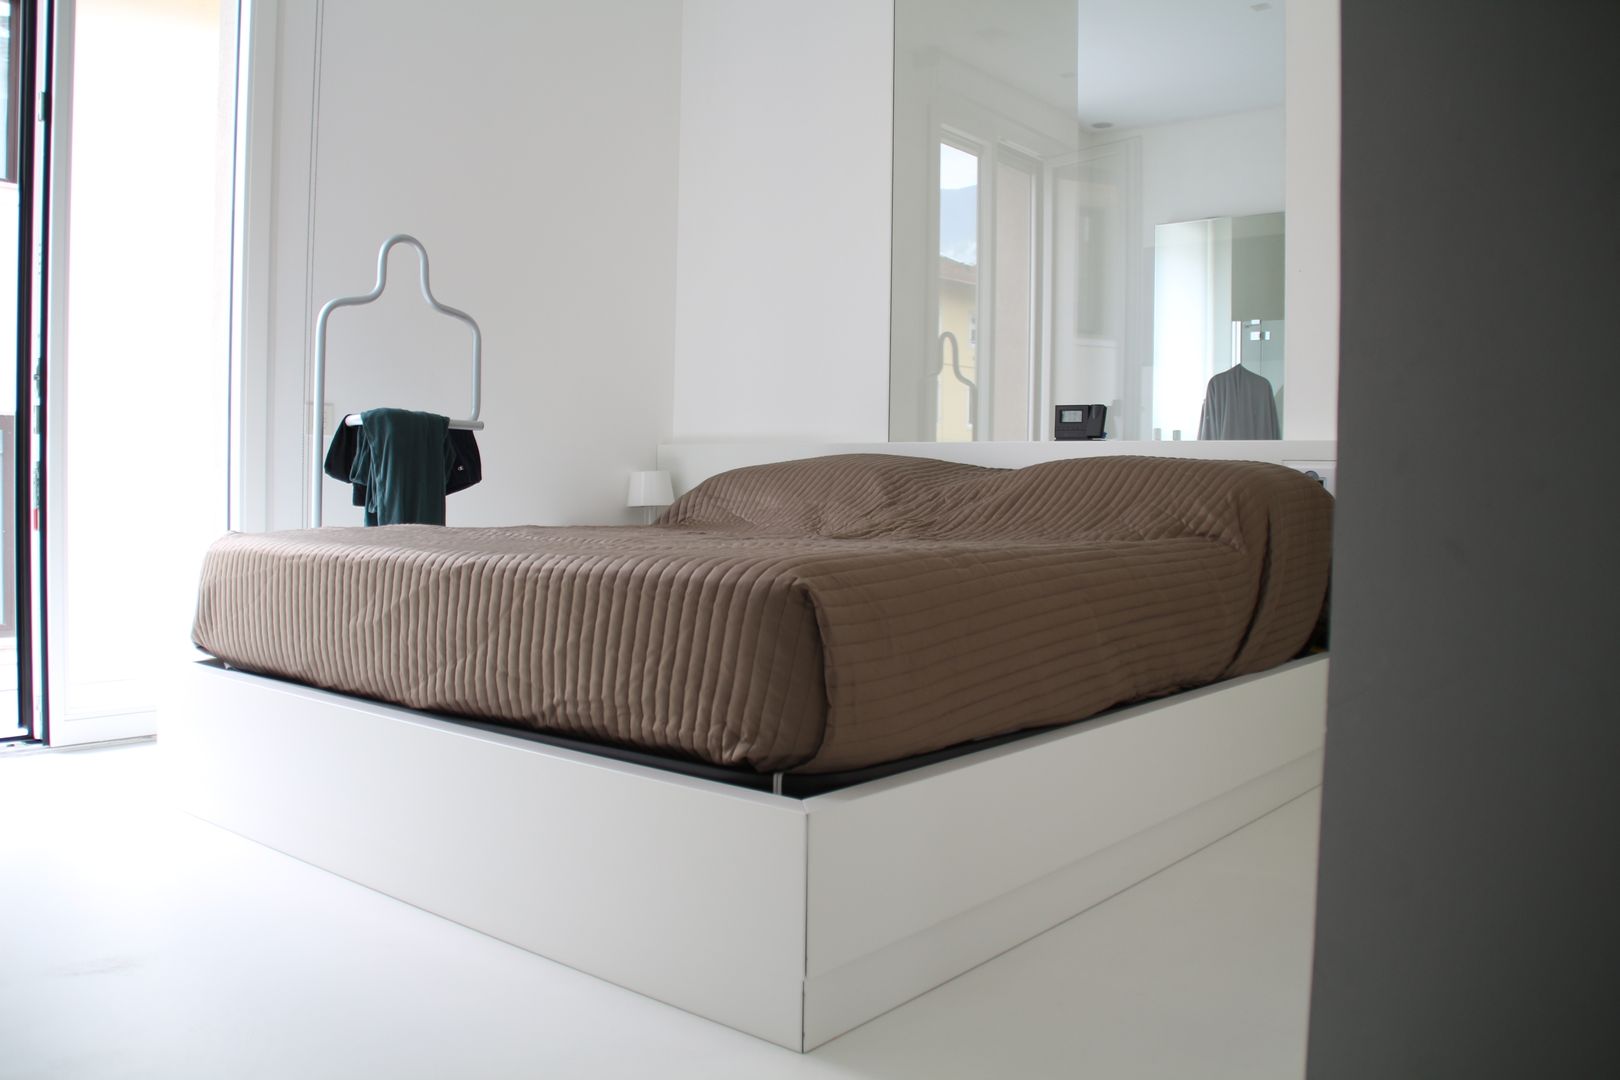 TOTAL WHITE, Serenella Pari design Serenella Pari design Minimalistische slaapkamers